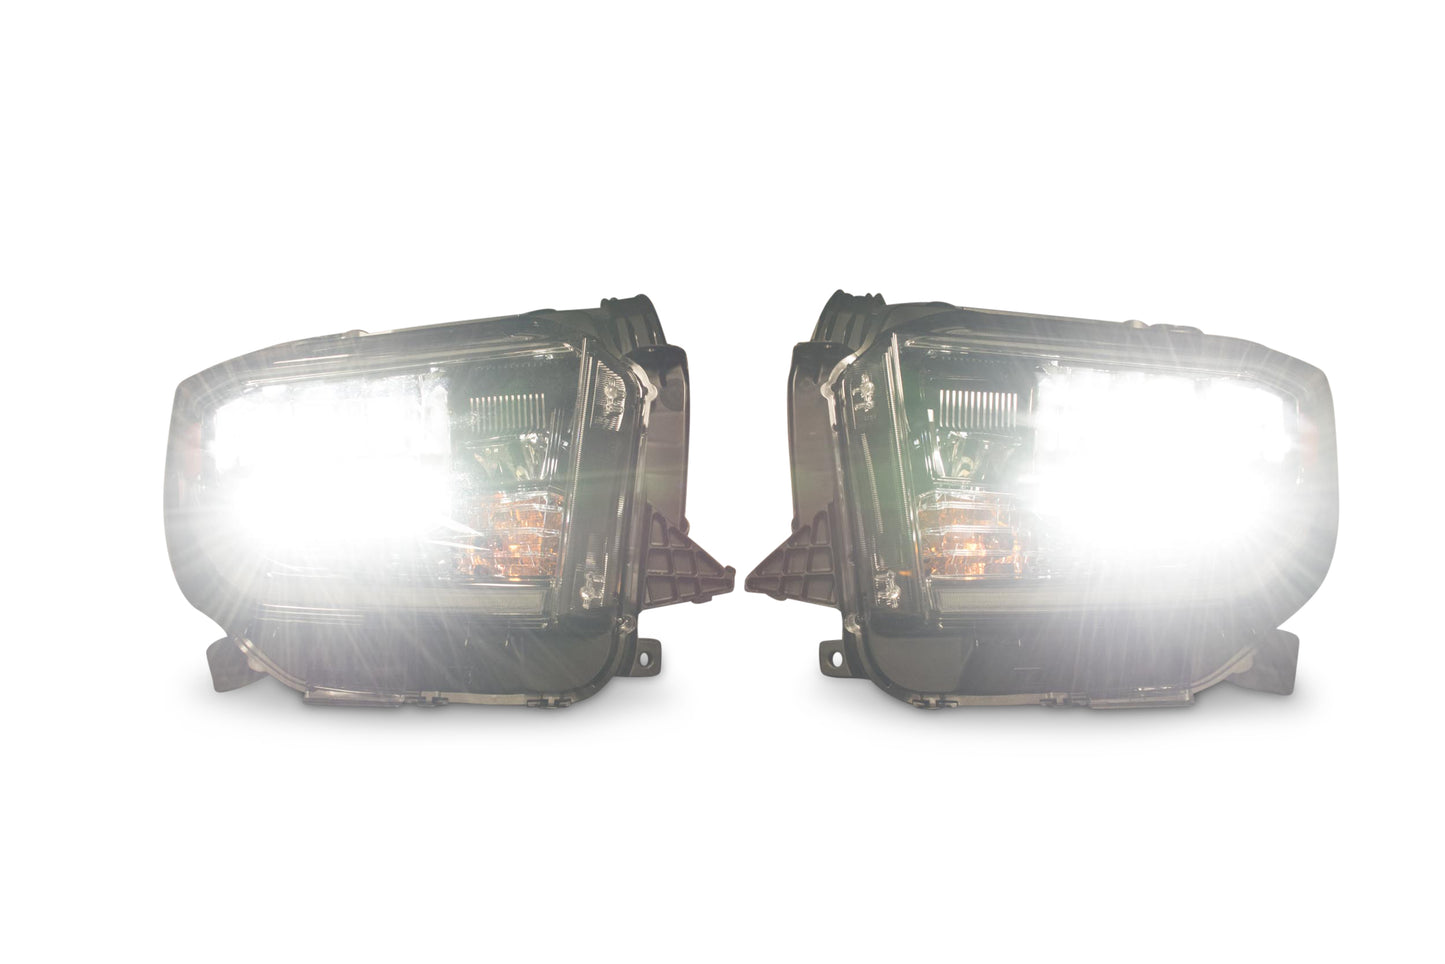 OEM LED Headlights: Toyota Tundra (18+) (Gunmetal / Right)